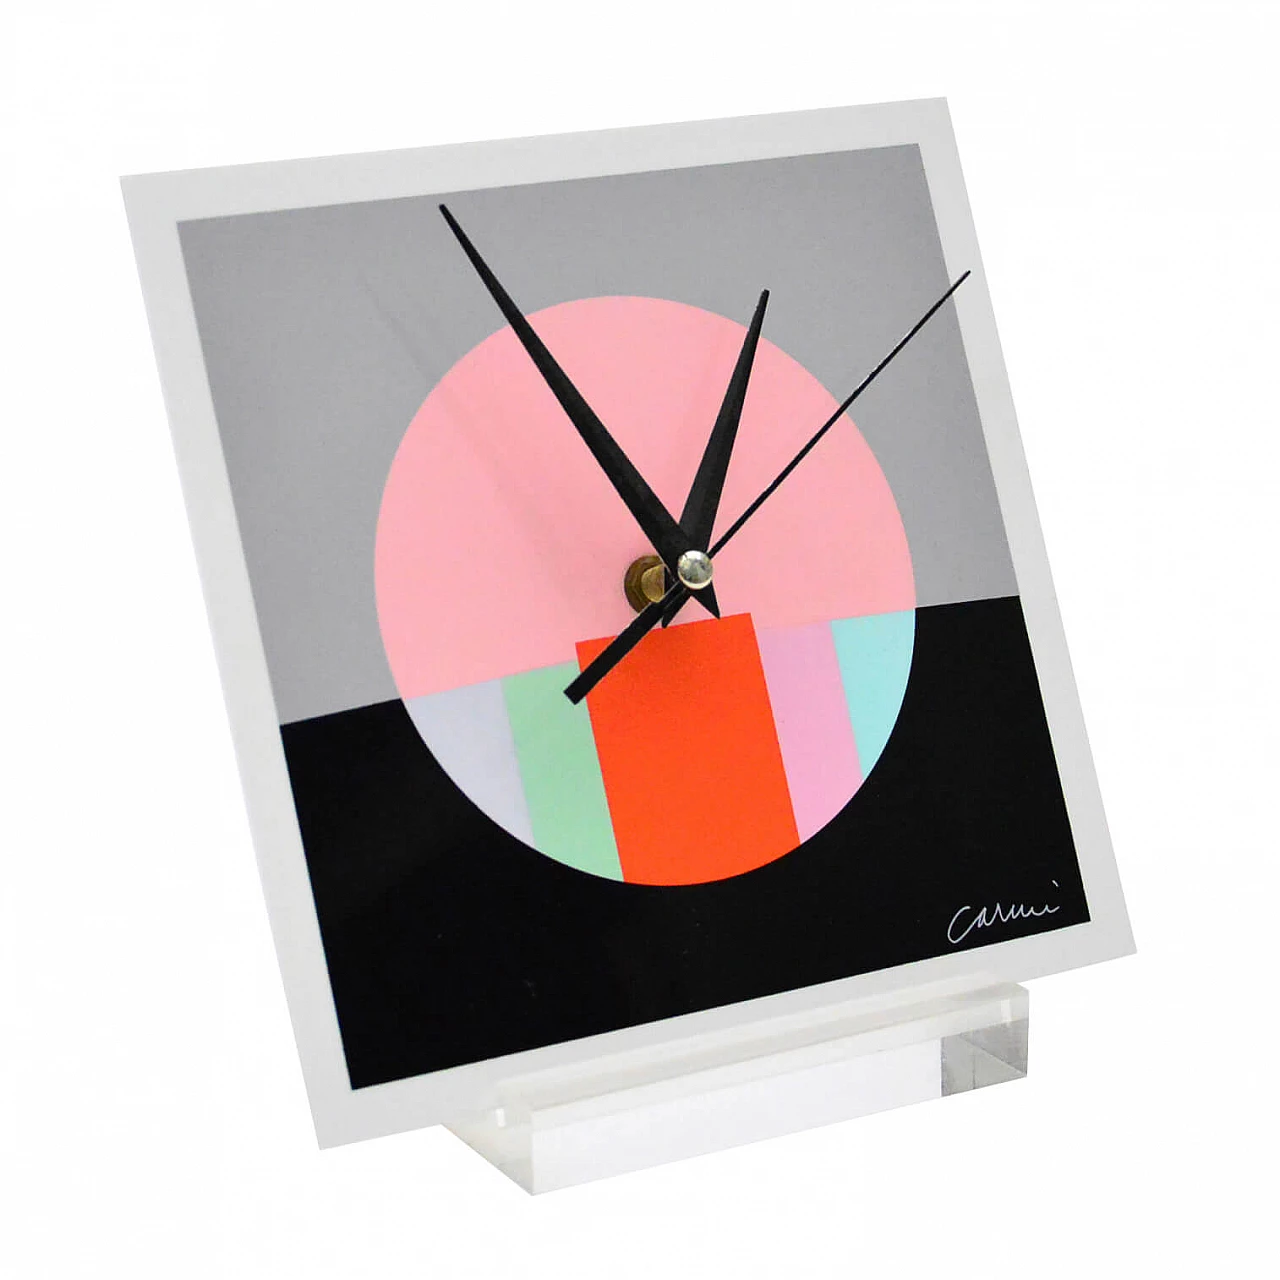 Eugenio Carmi's table clock in silkscreened plexiglas, 80s 1228942